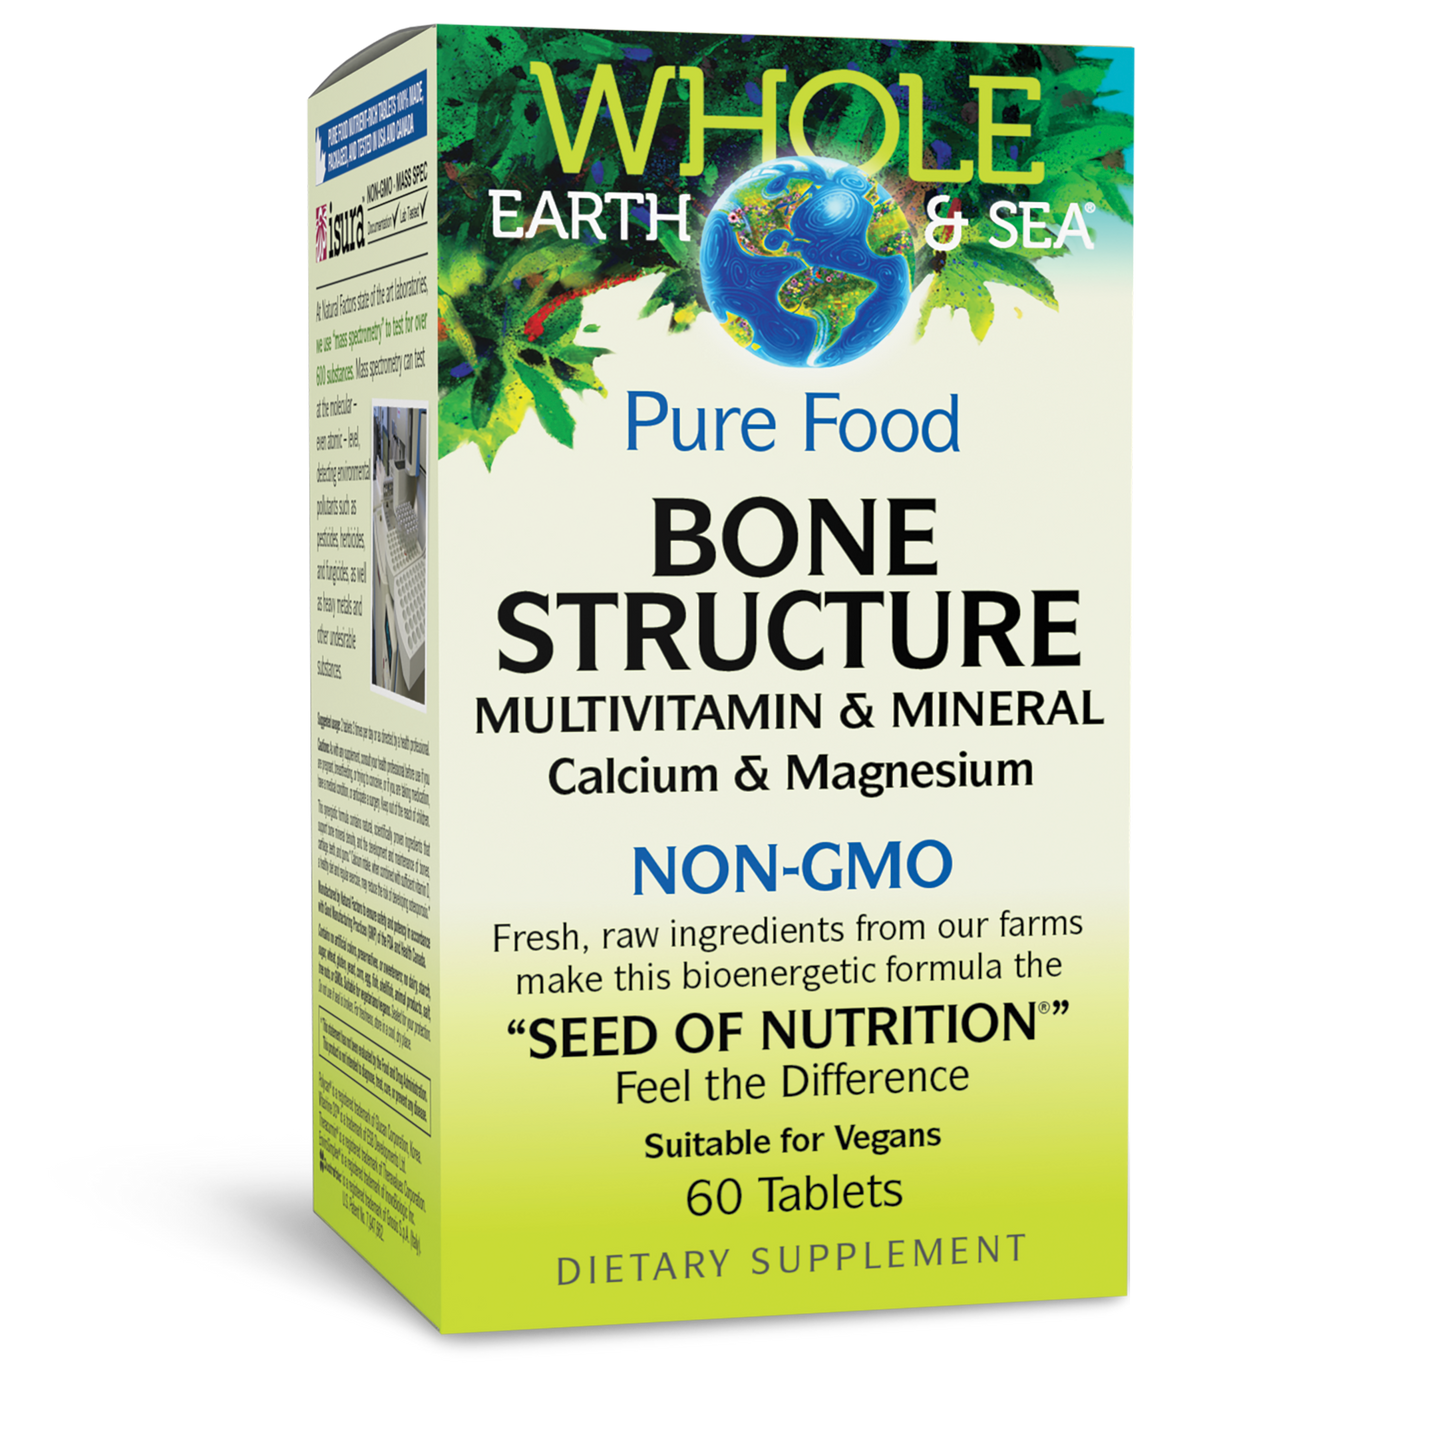 Bone Structure Multivitamin & Mineral|variant|hi-res|35505U